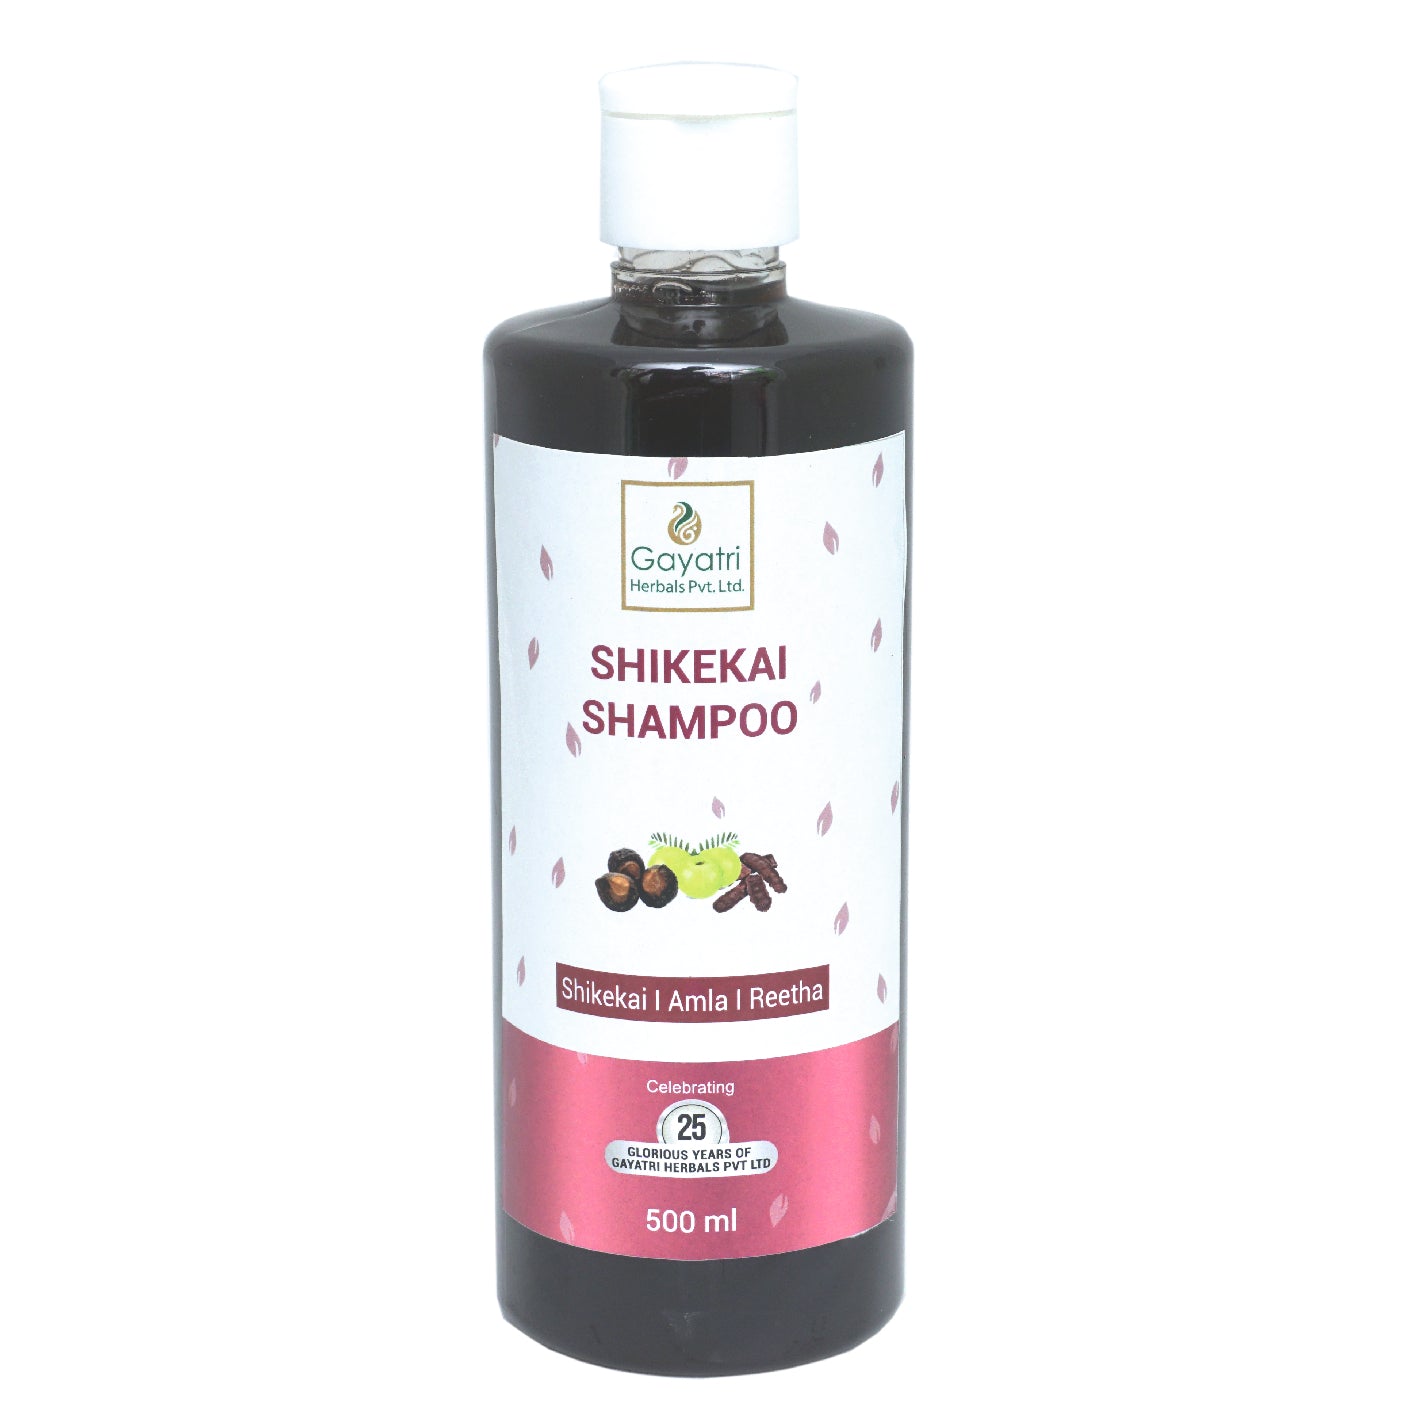 Shikekai Shampoo - 500 ml